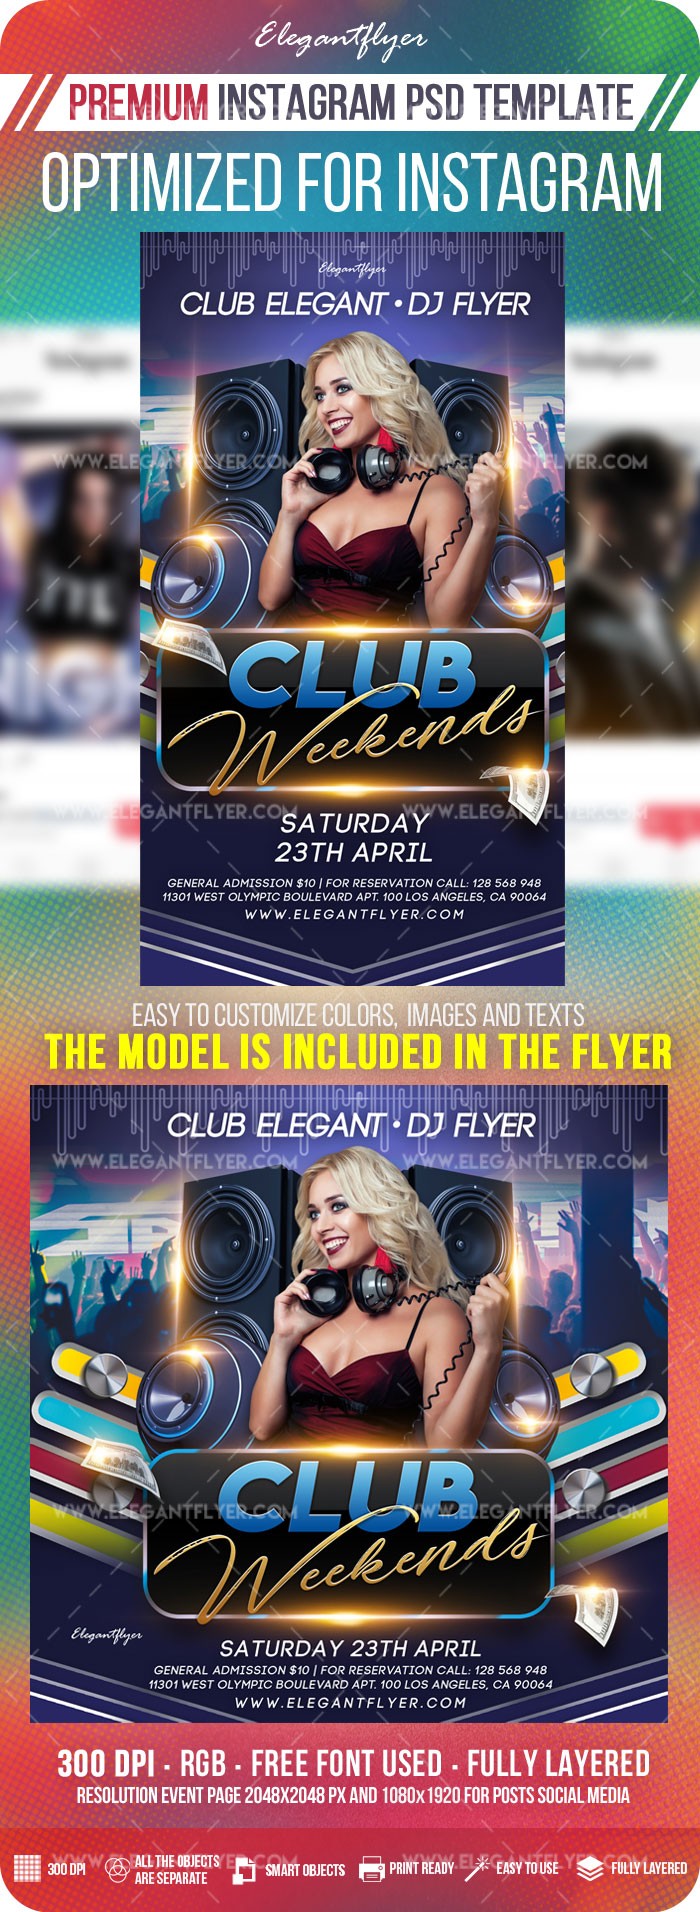 Club Weekends Instagram by ElegantFlyer